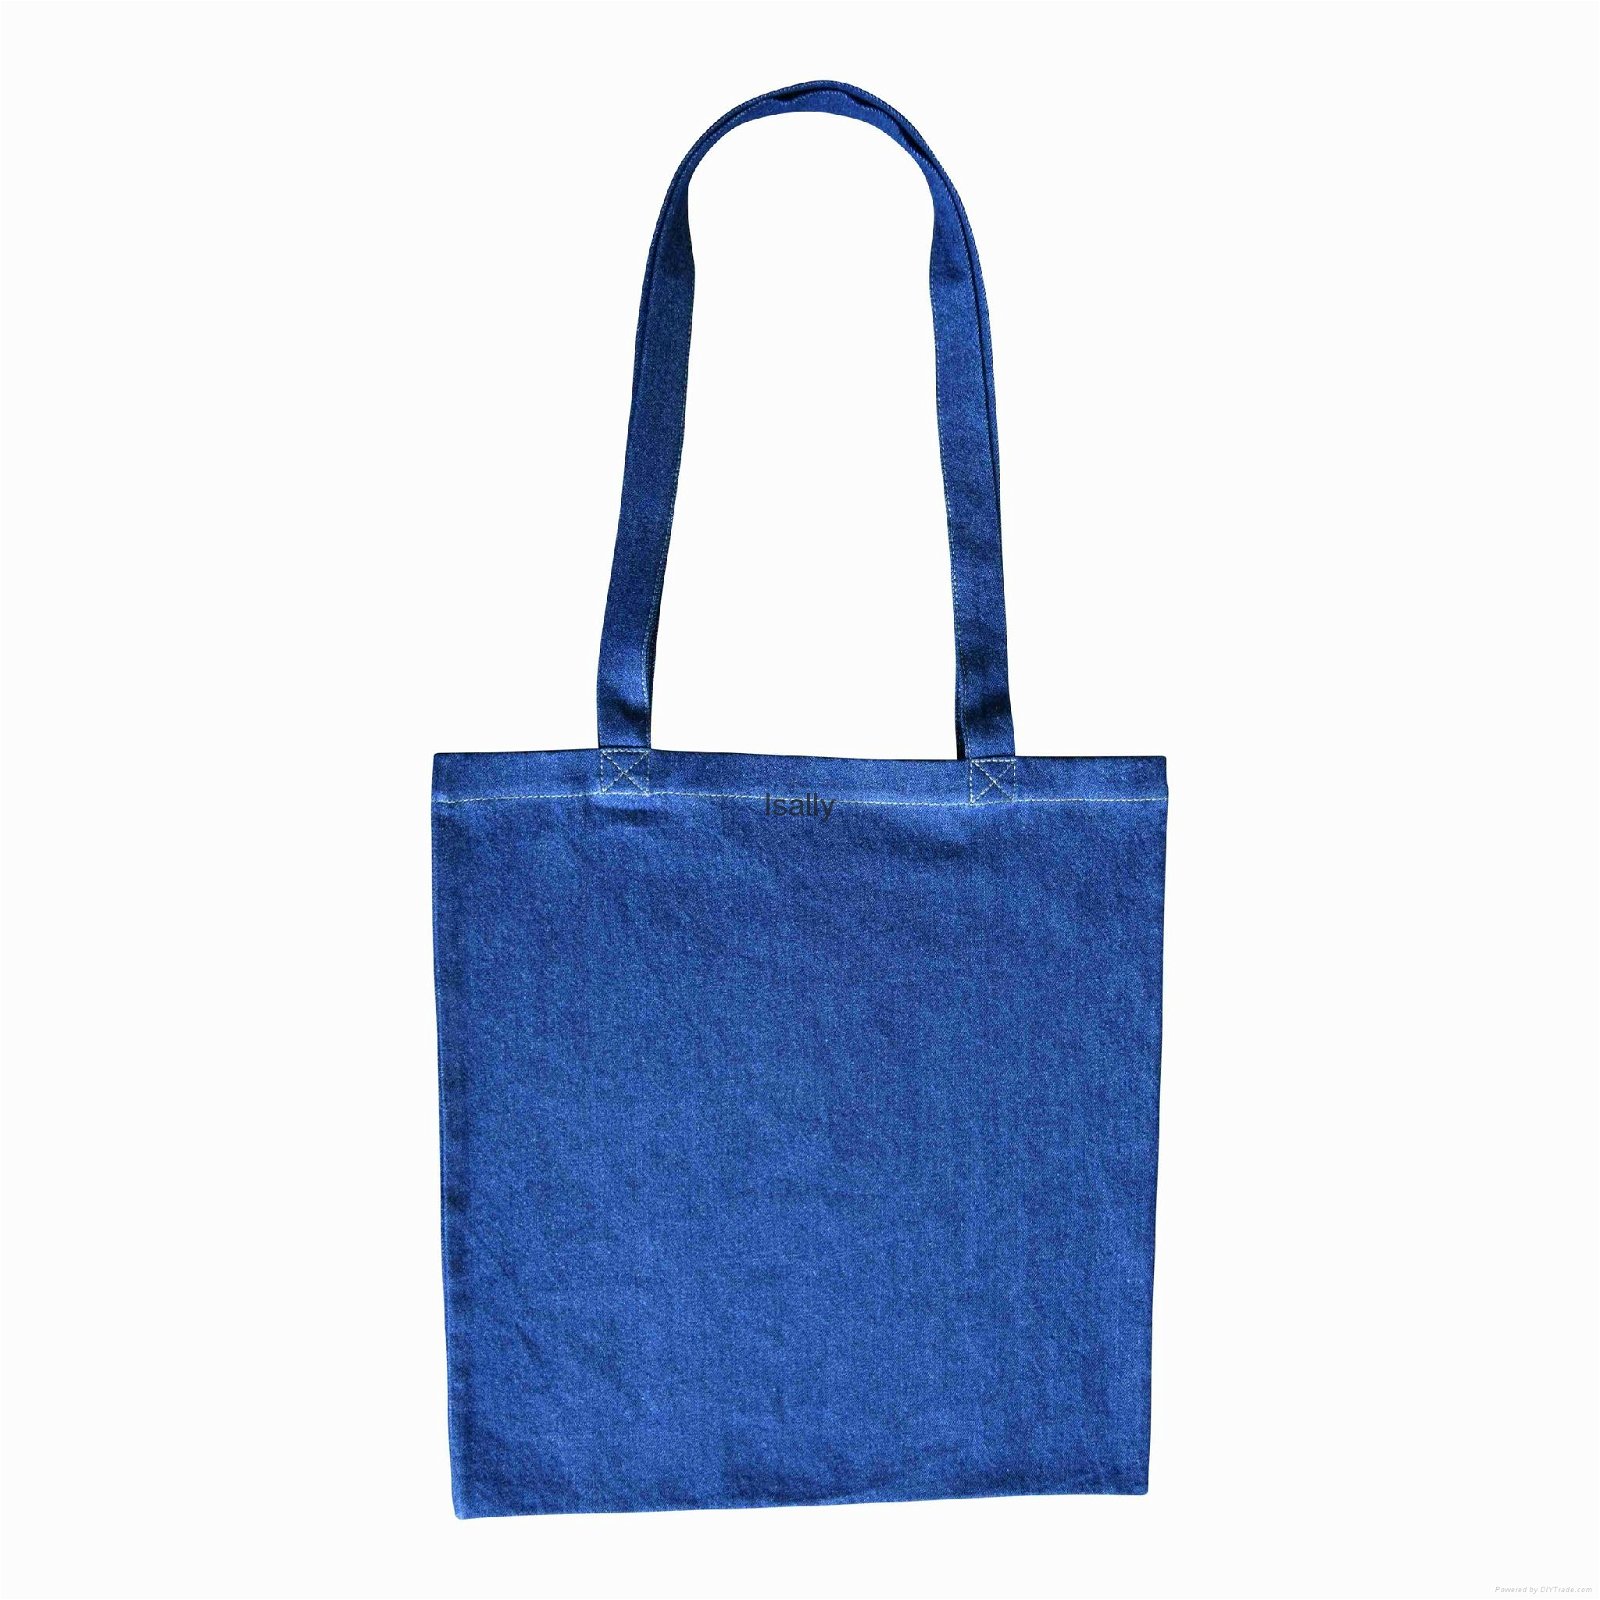 Cotton handbag long handle bags for shopping bags 2